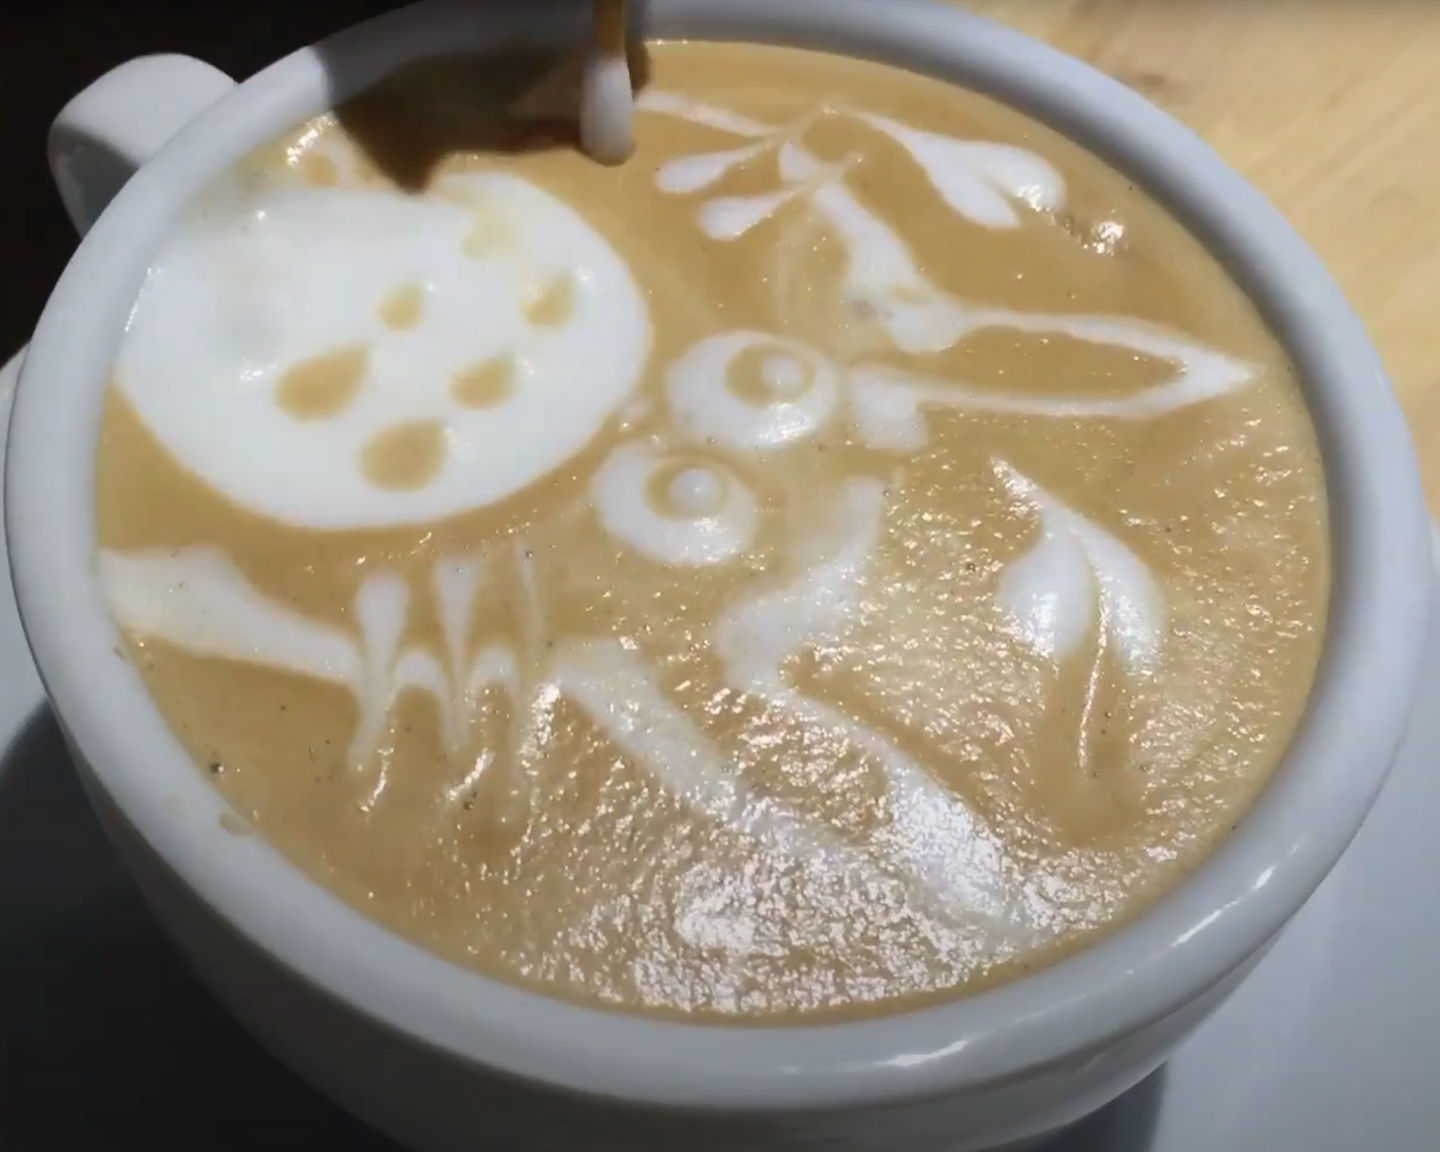 Activity > Etching Latte Art